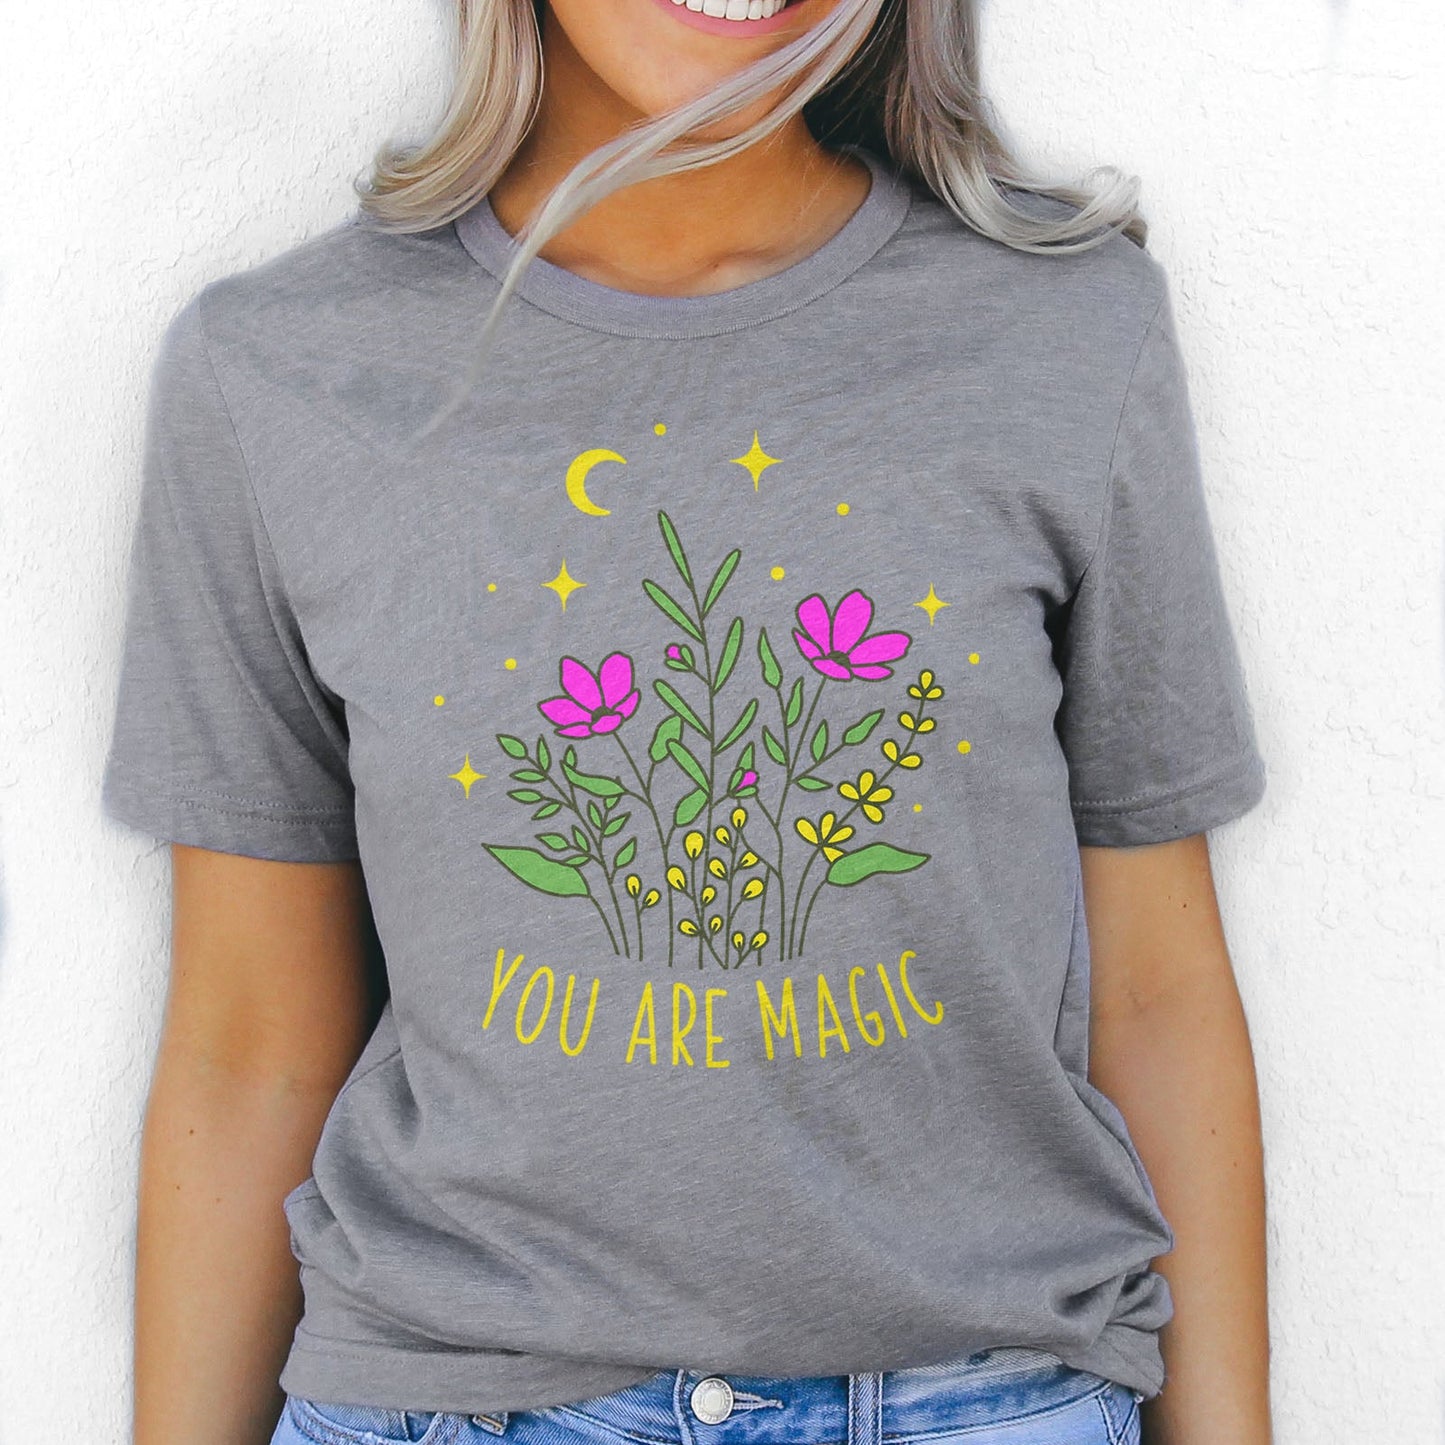 You Are Magic Tee Shirts For Women - Christian Shirts for Women - Religious Tee Shirts